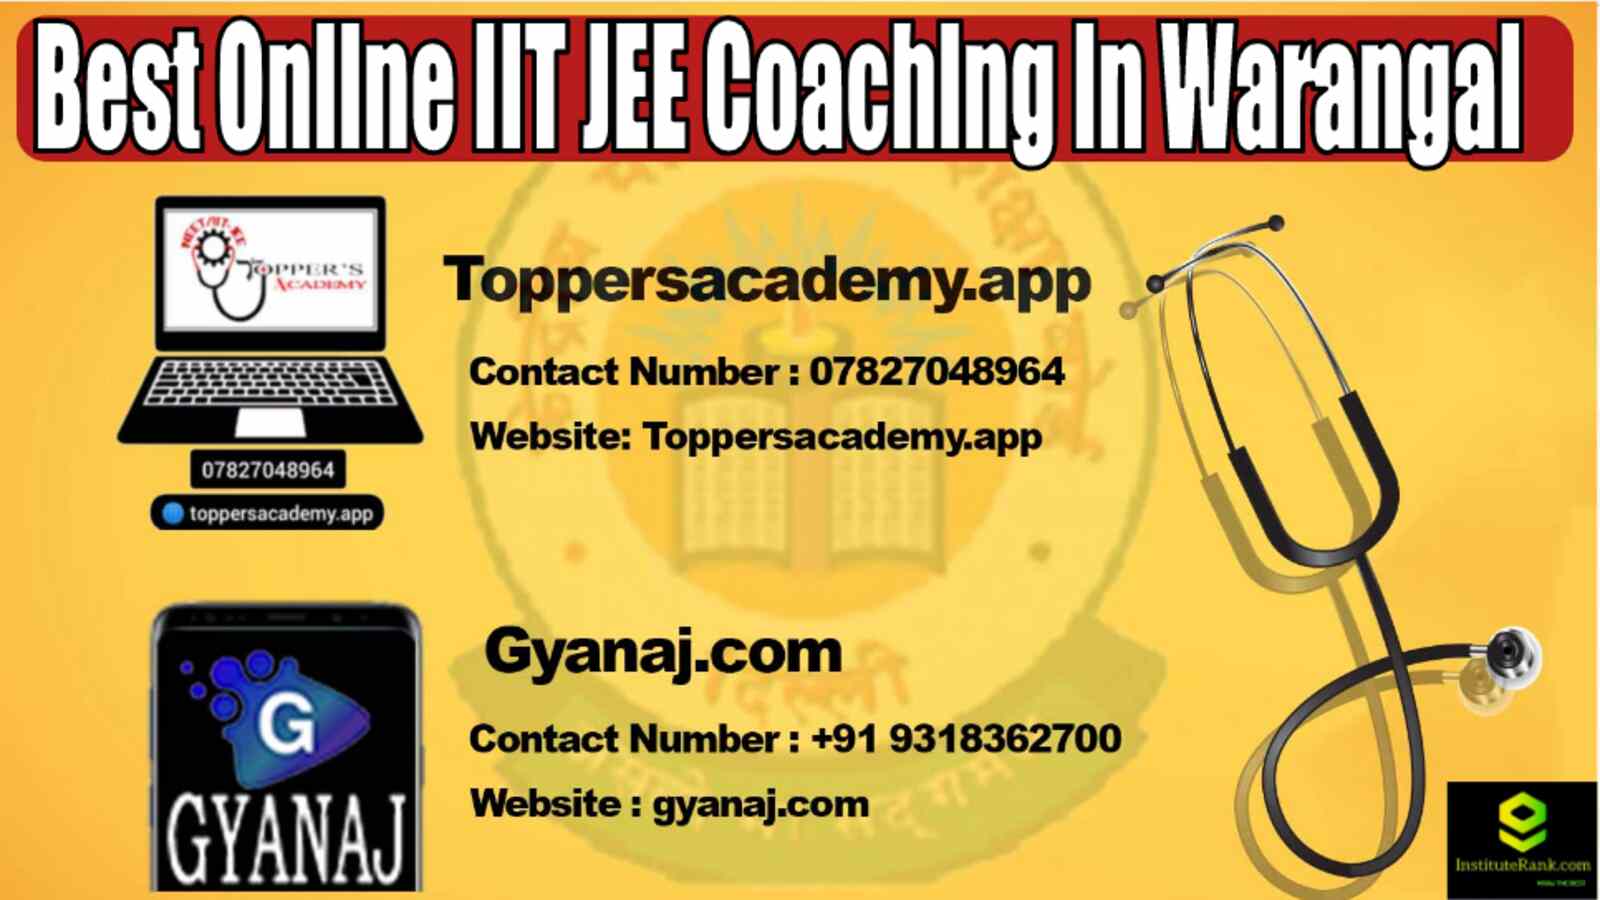 Best Online IIT JEE Coaching in Warangal 2022